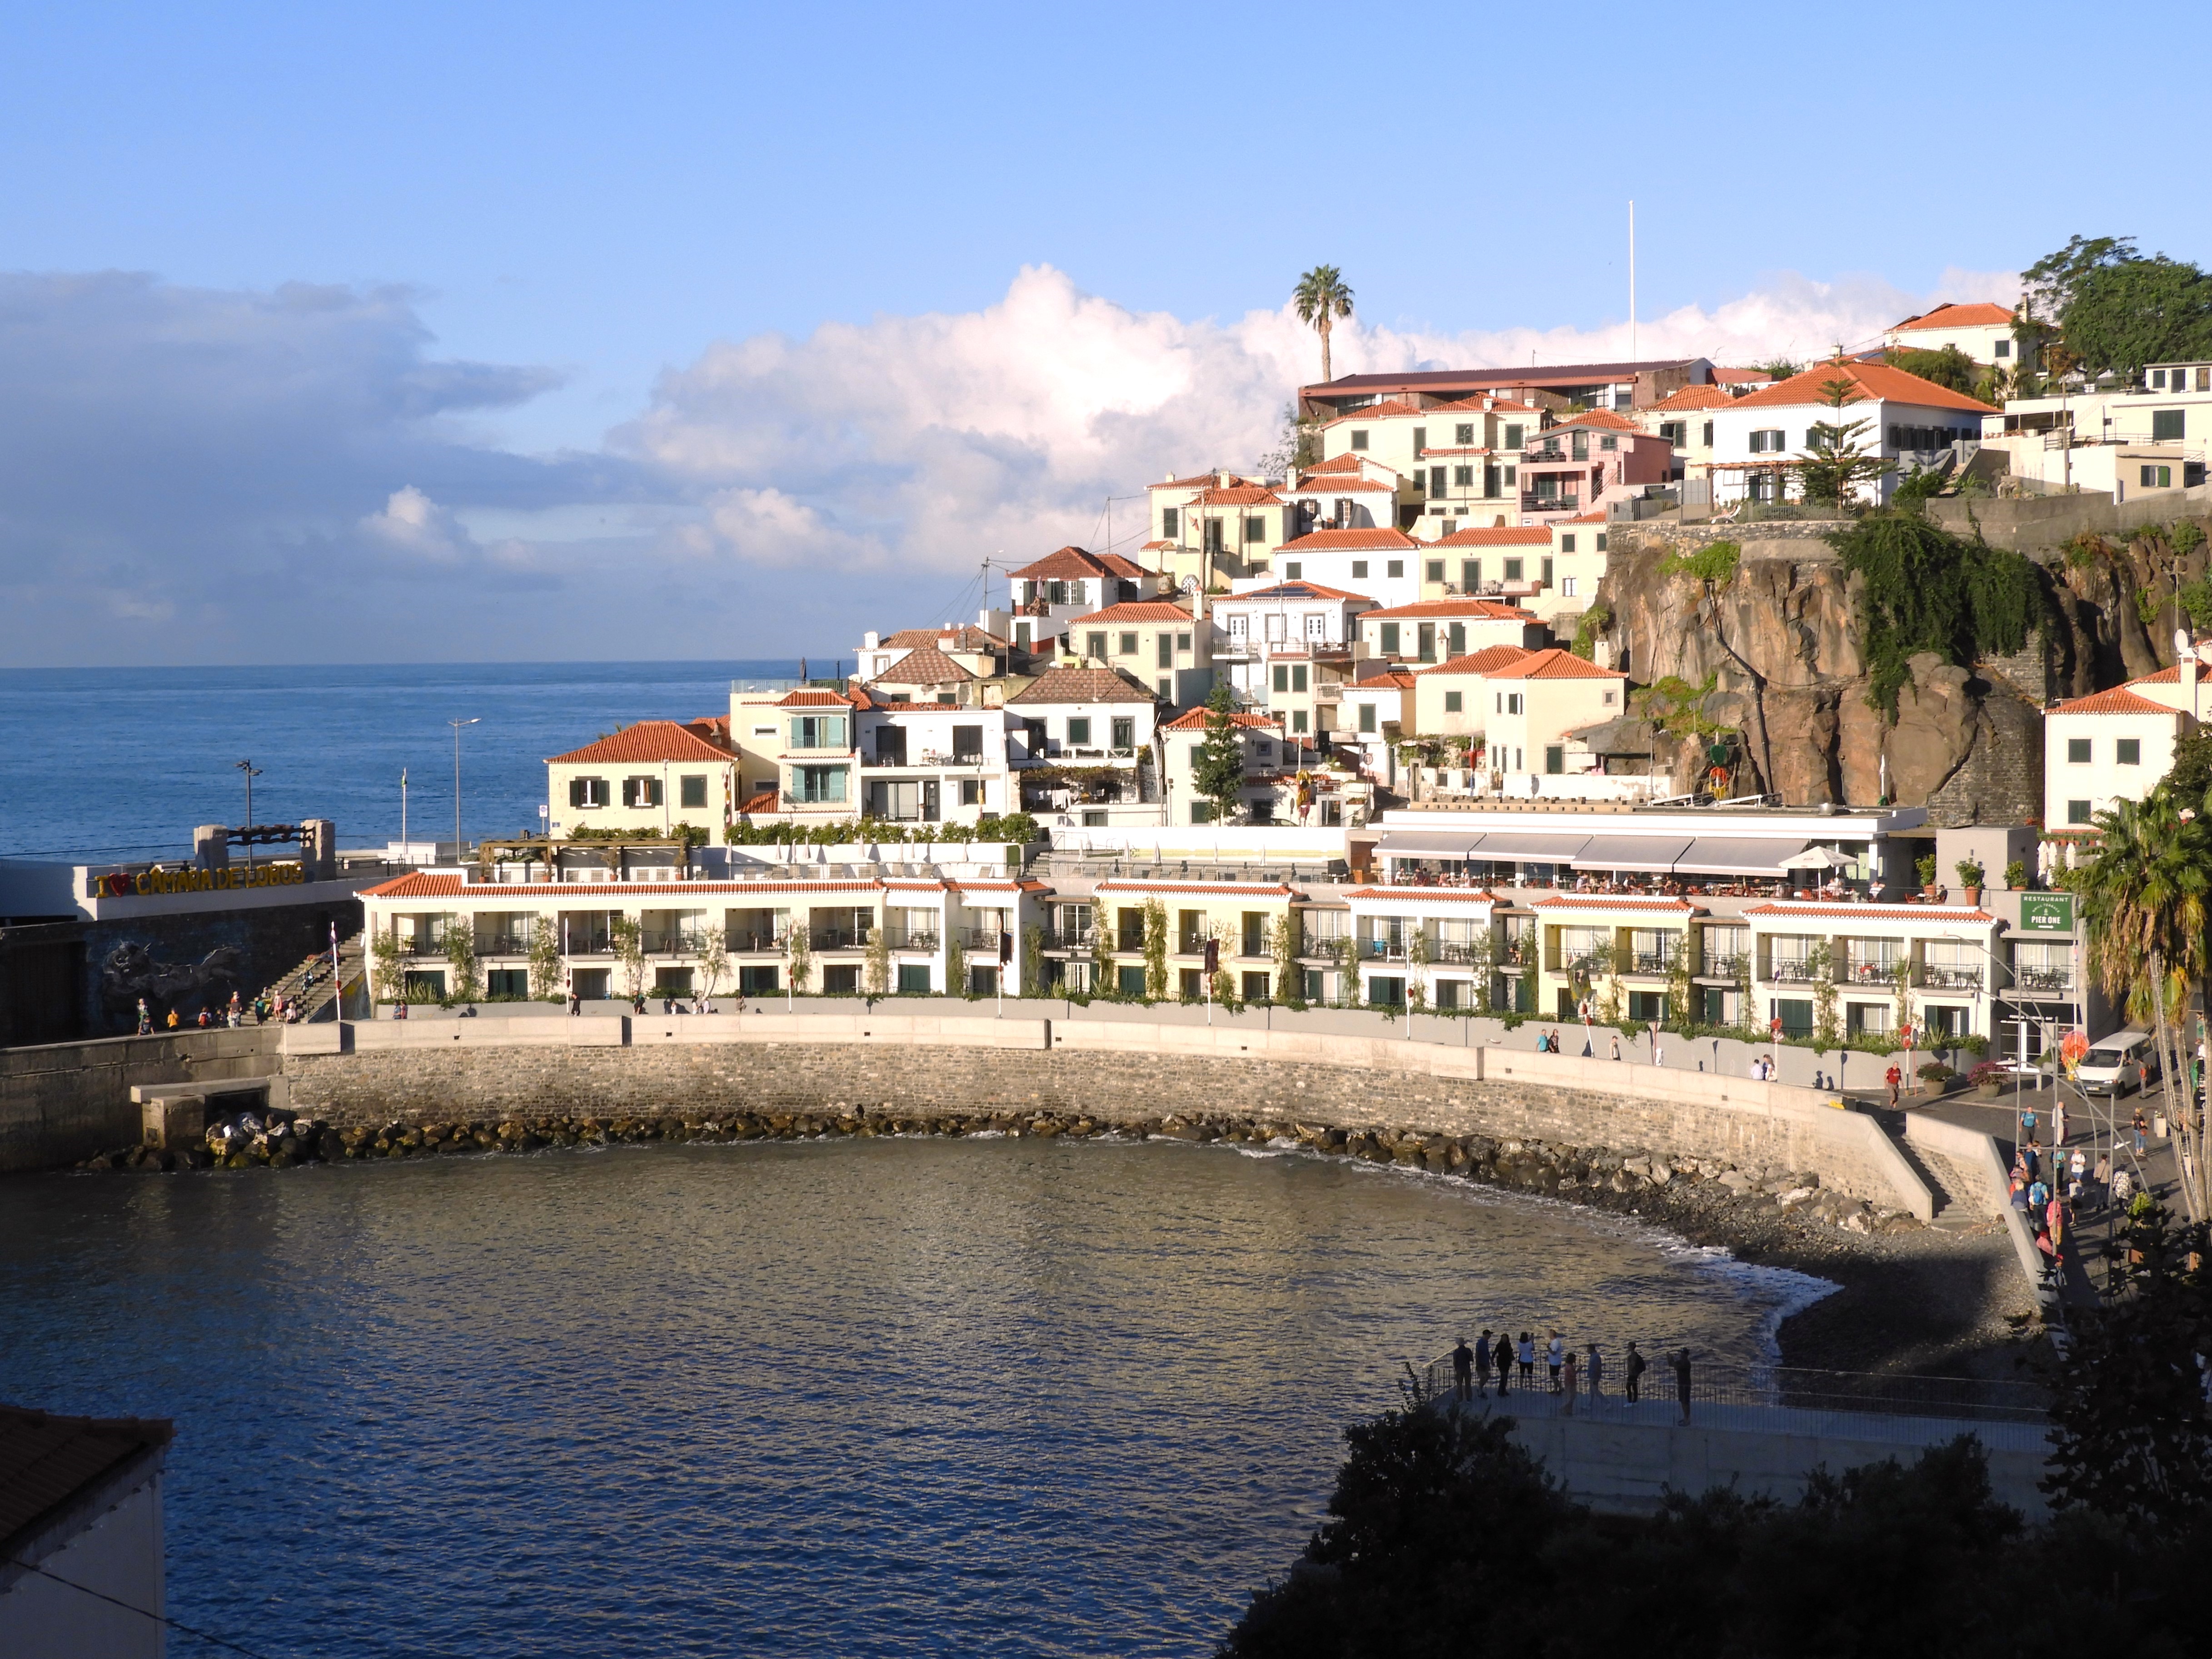 1181 - Camara de Lobos nell'isola di Madeira - Portogallo